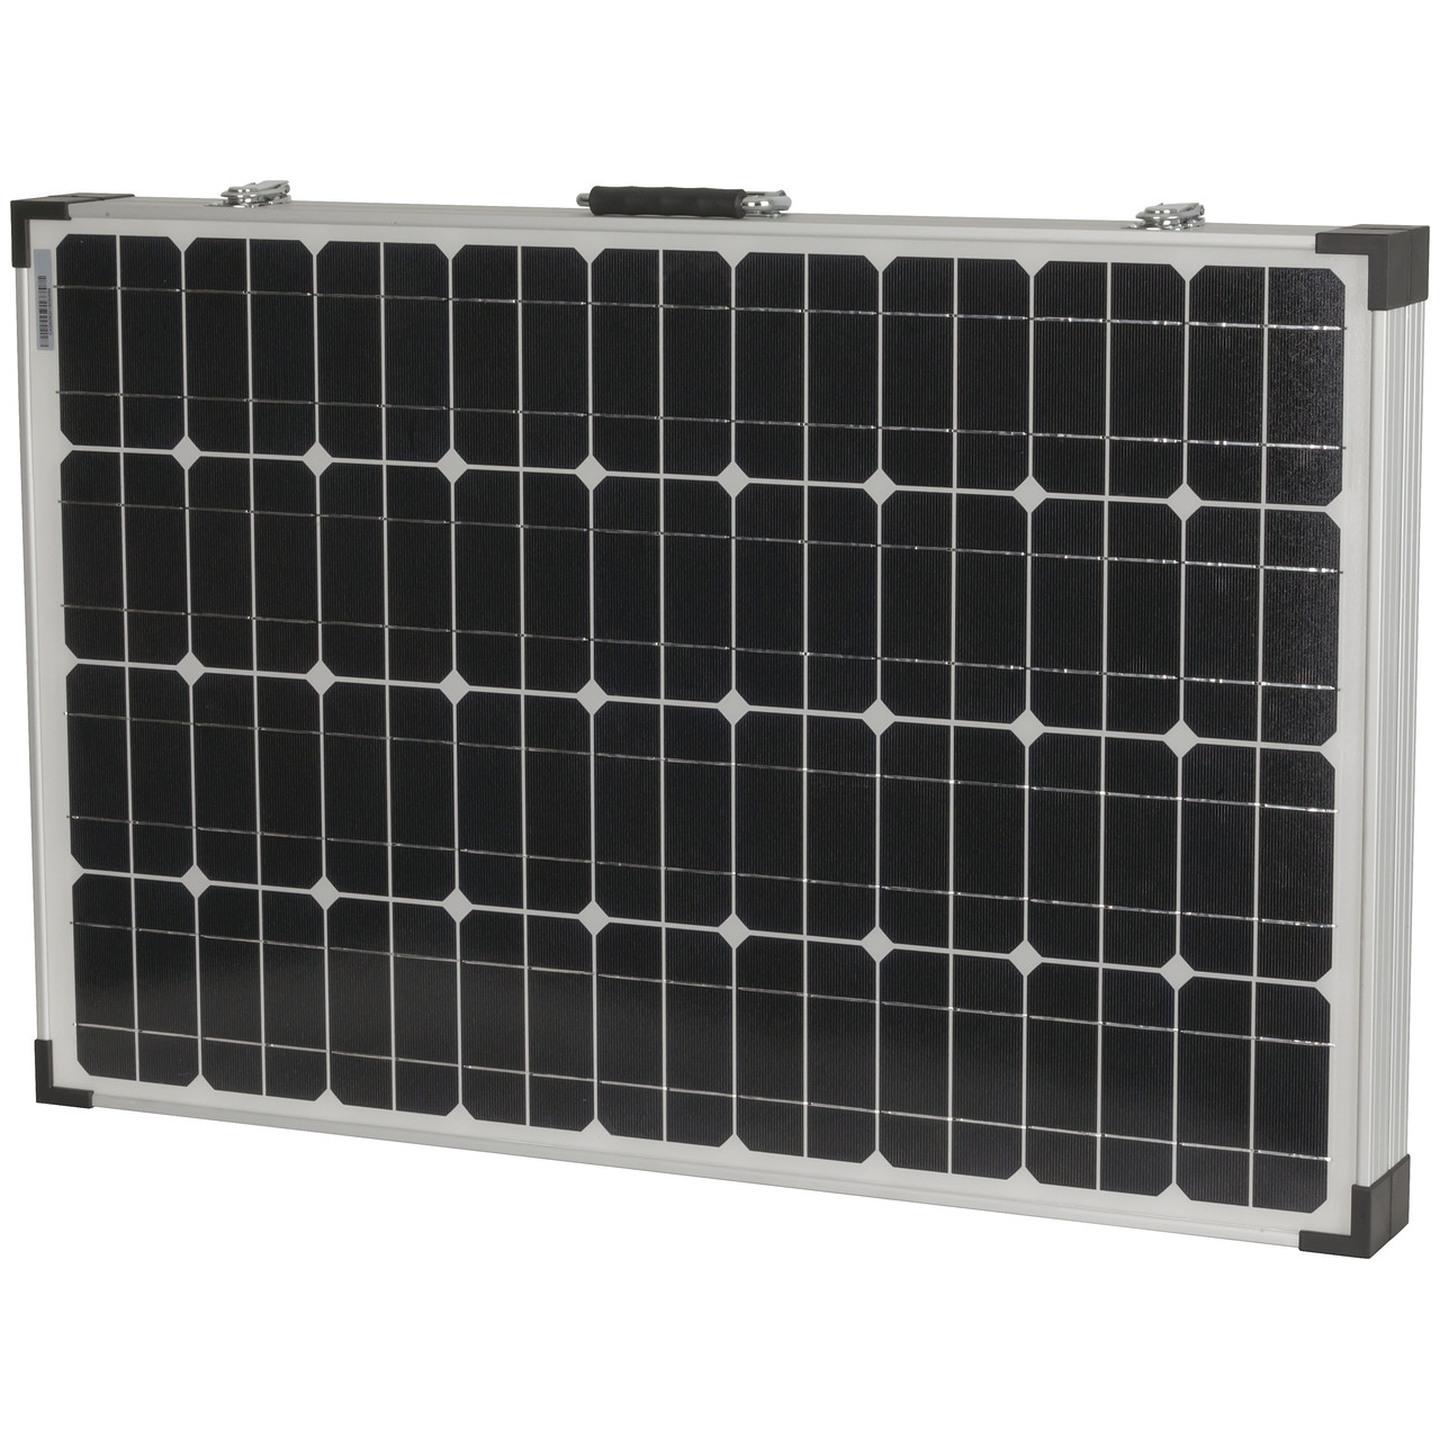 Powertech 120W Folding Solar Panel with 10m Lead